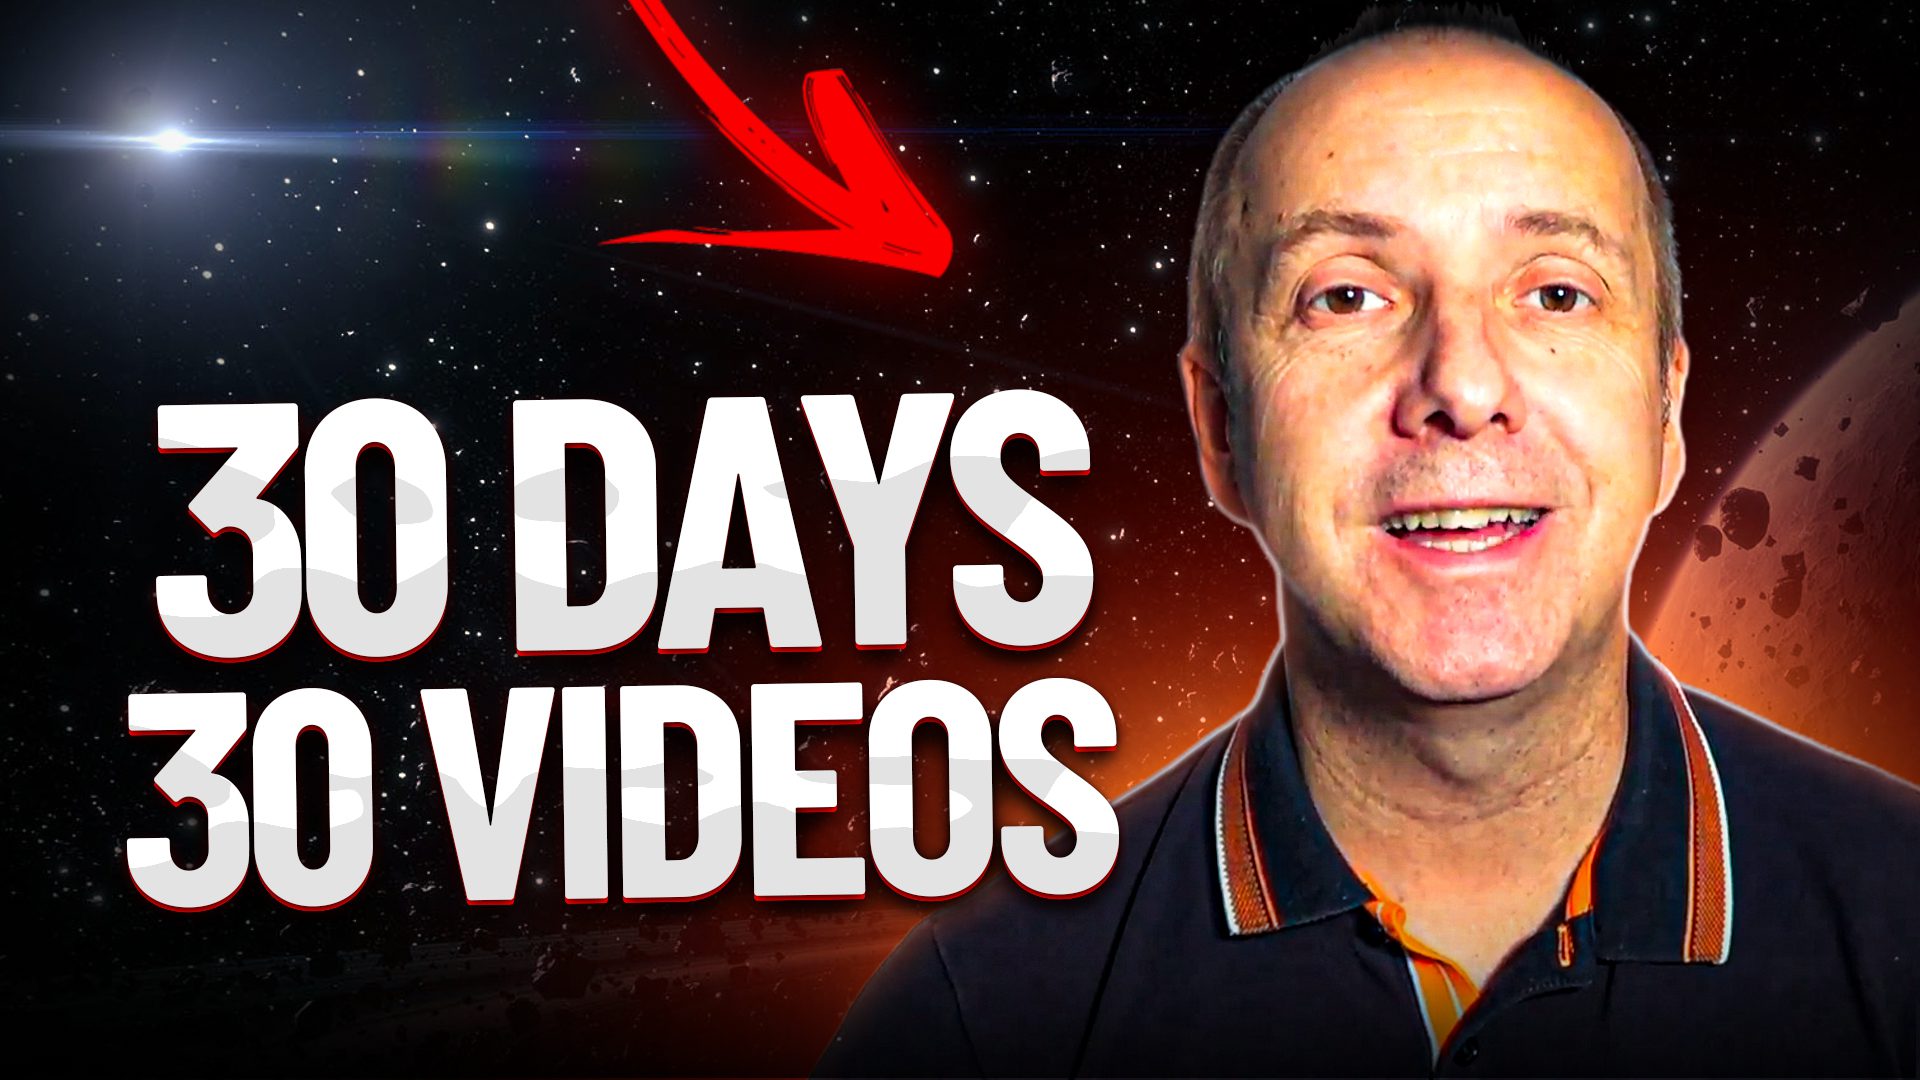 30-days 30 video youtube challenge